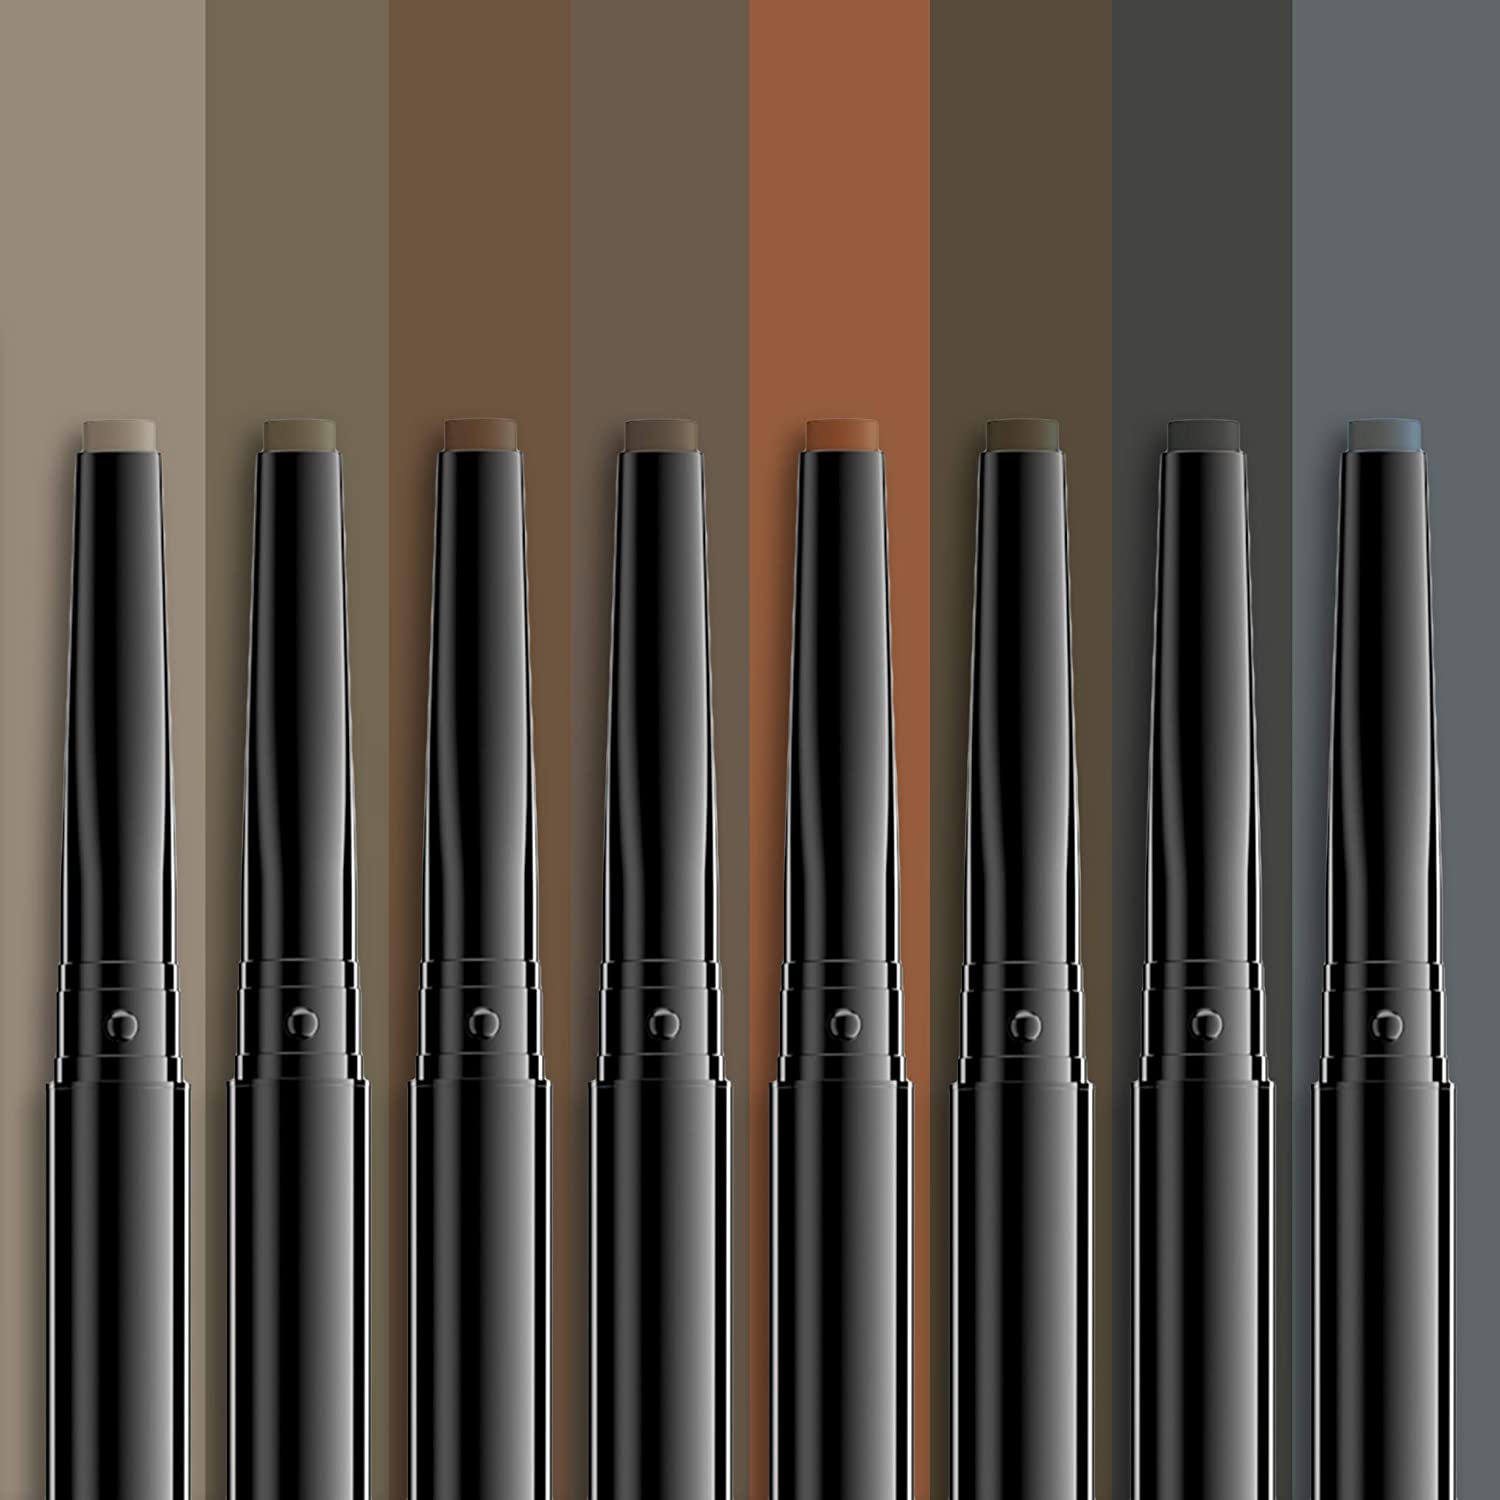 NYX Professional Makeup Precision Eyebrow Pencil, Espresso - image 6 of 12